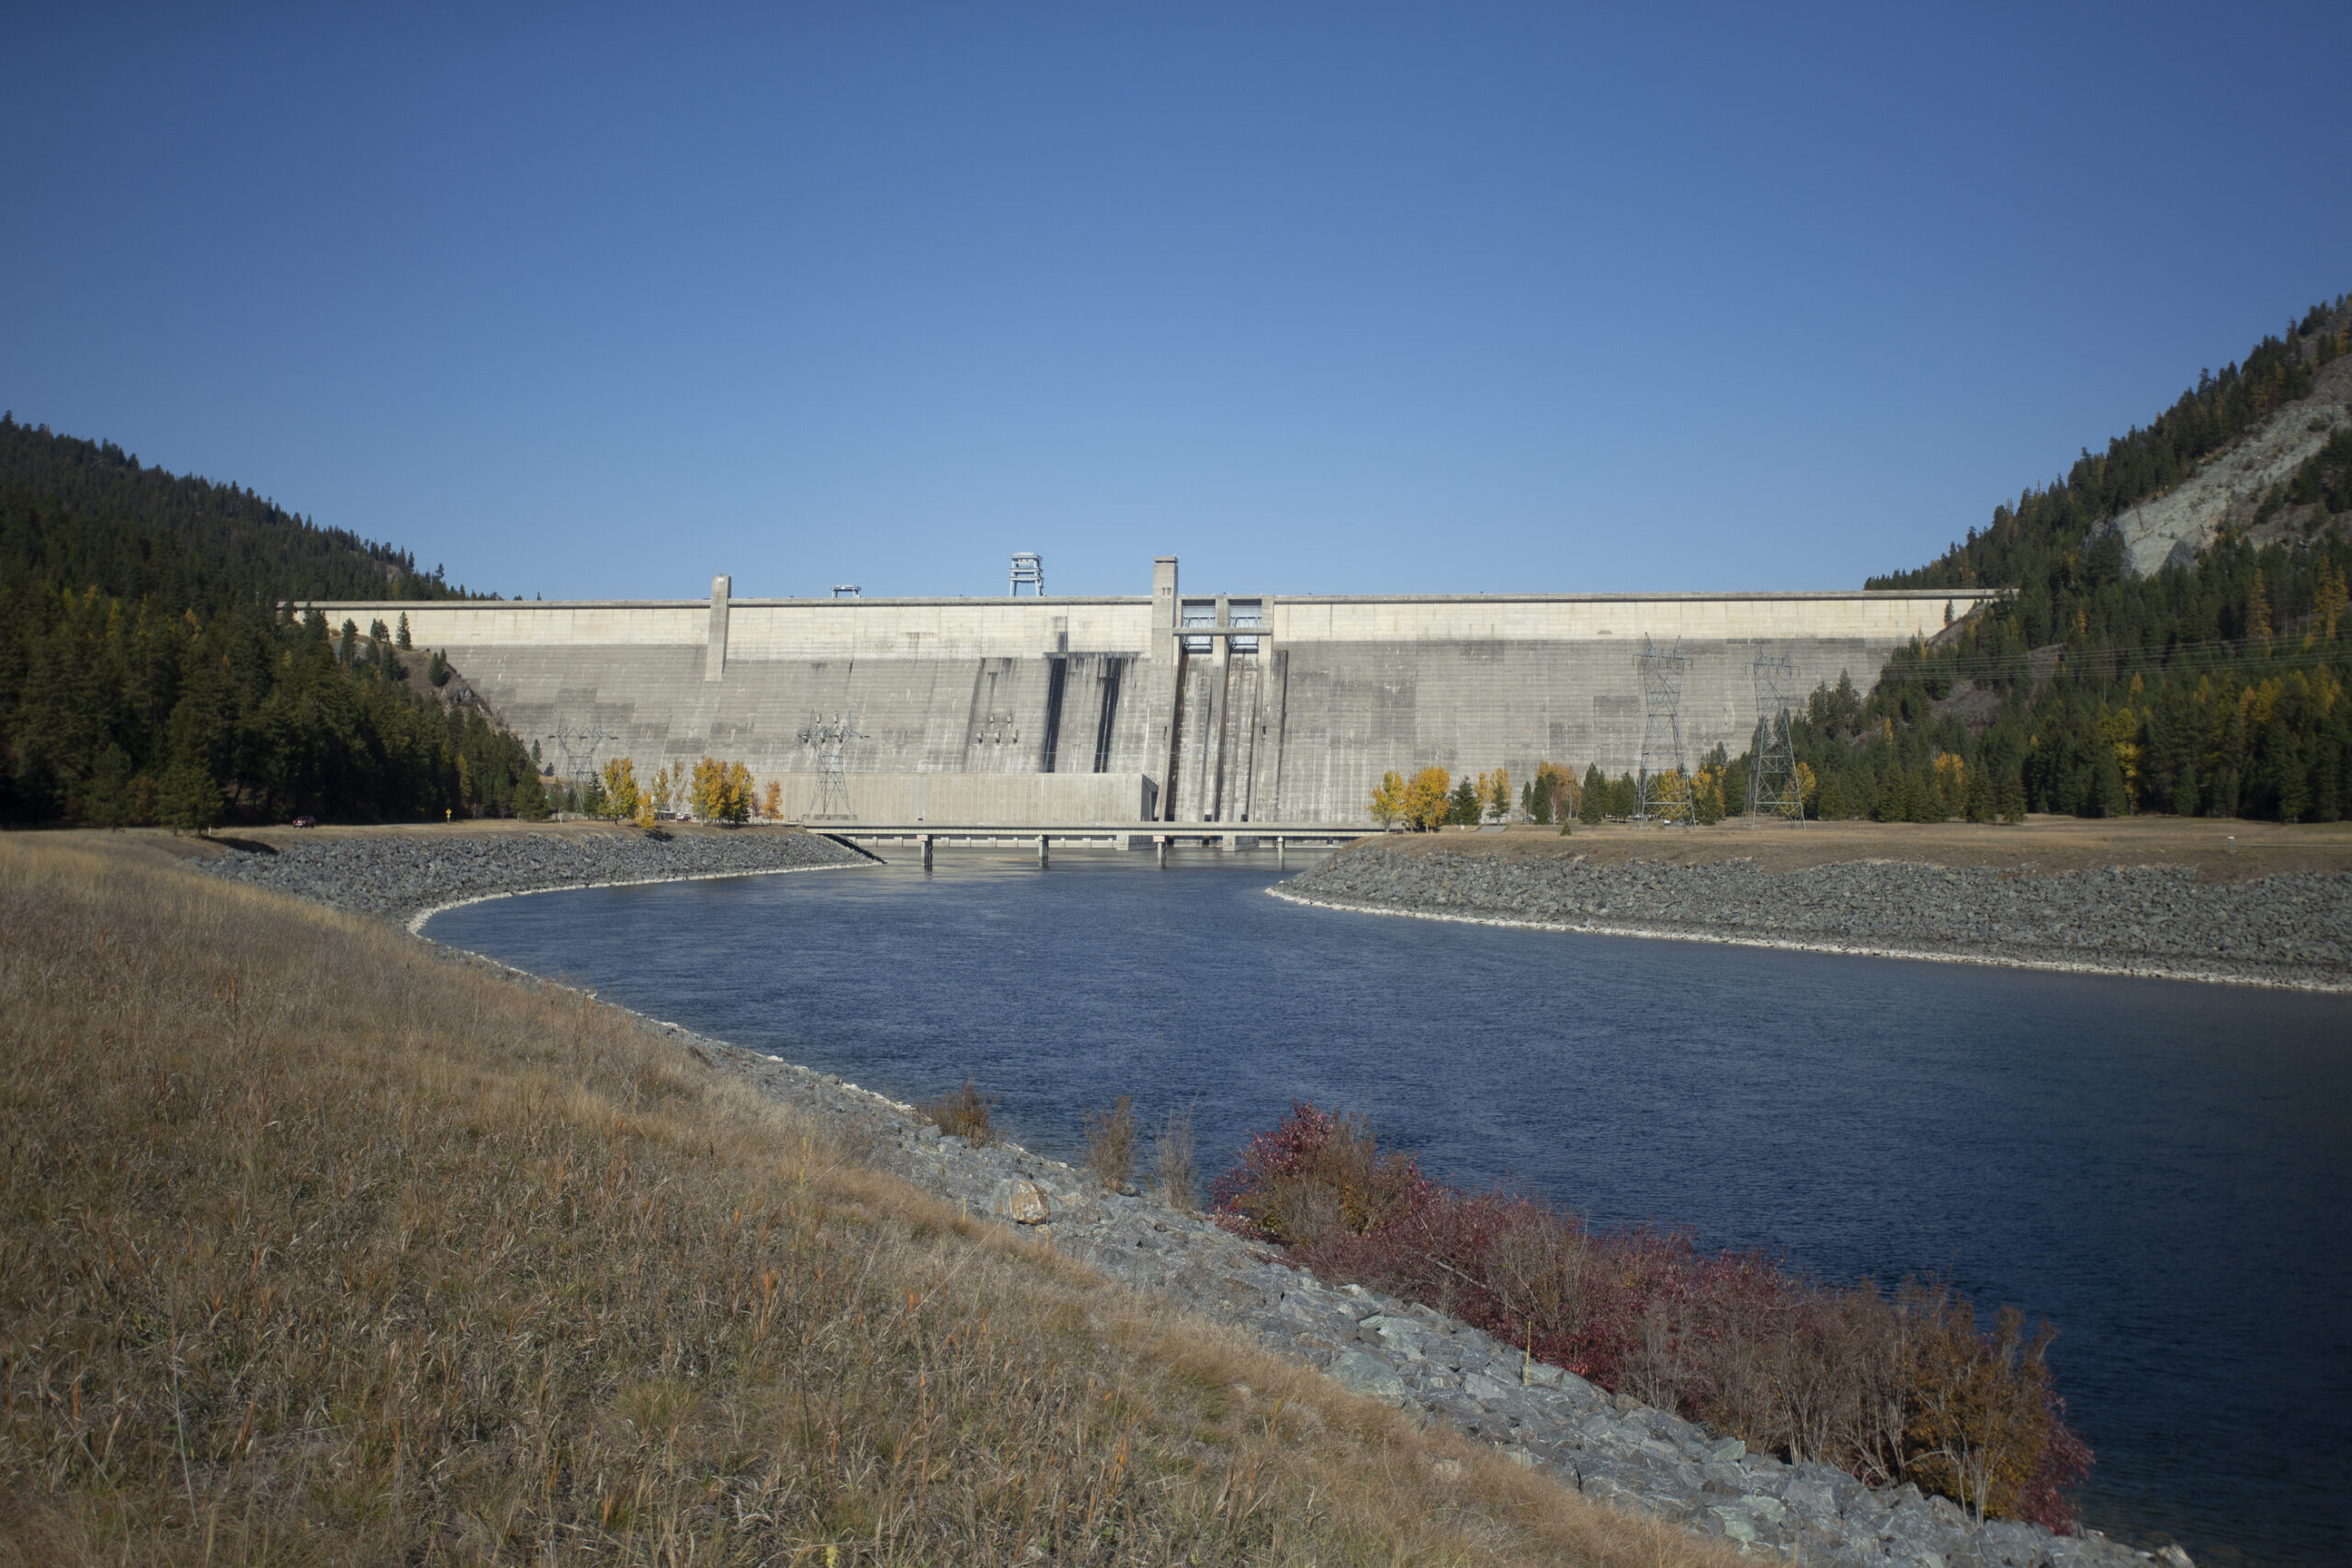 The Libby Dam